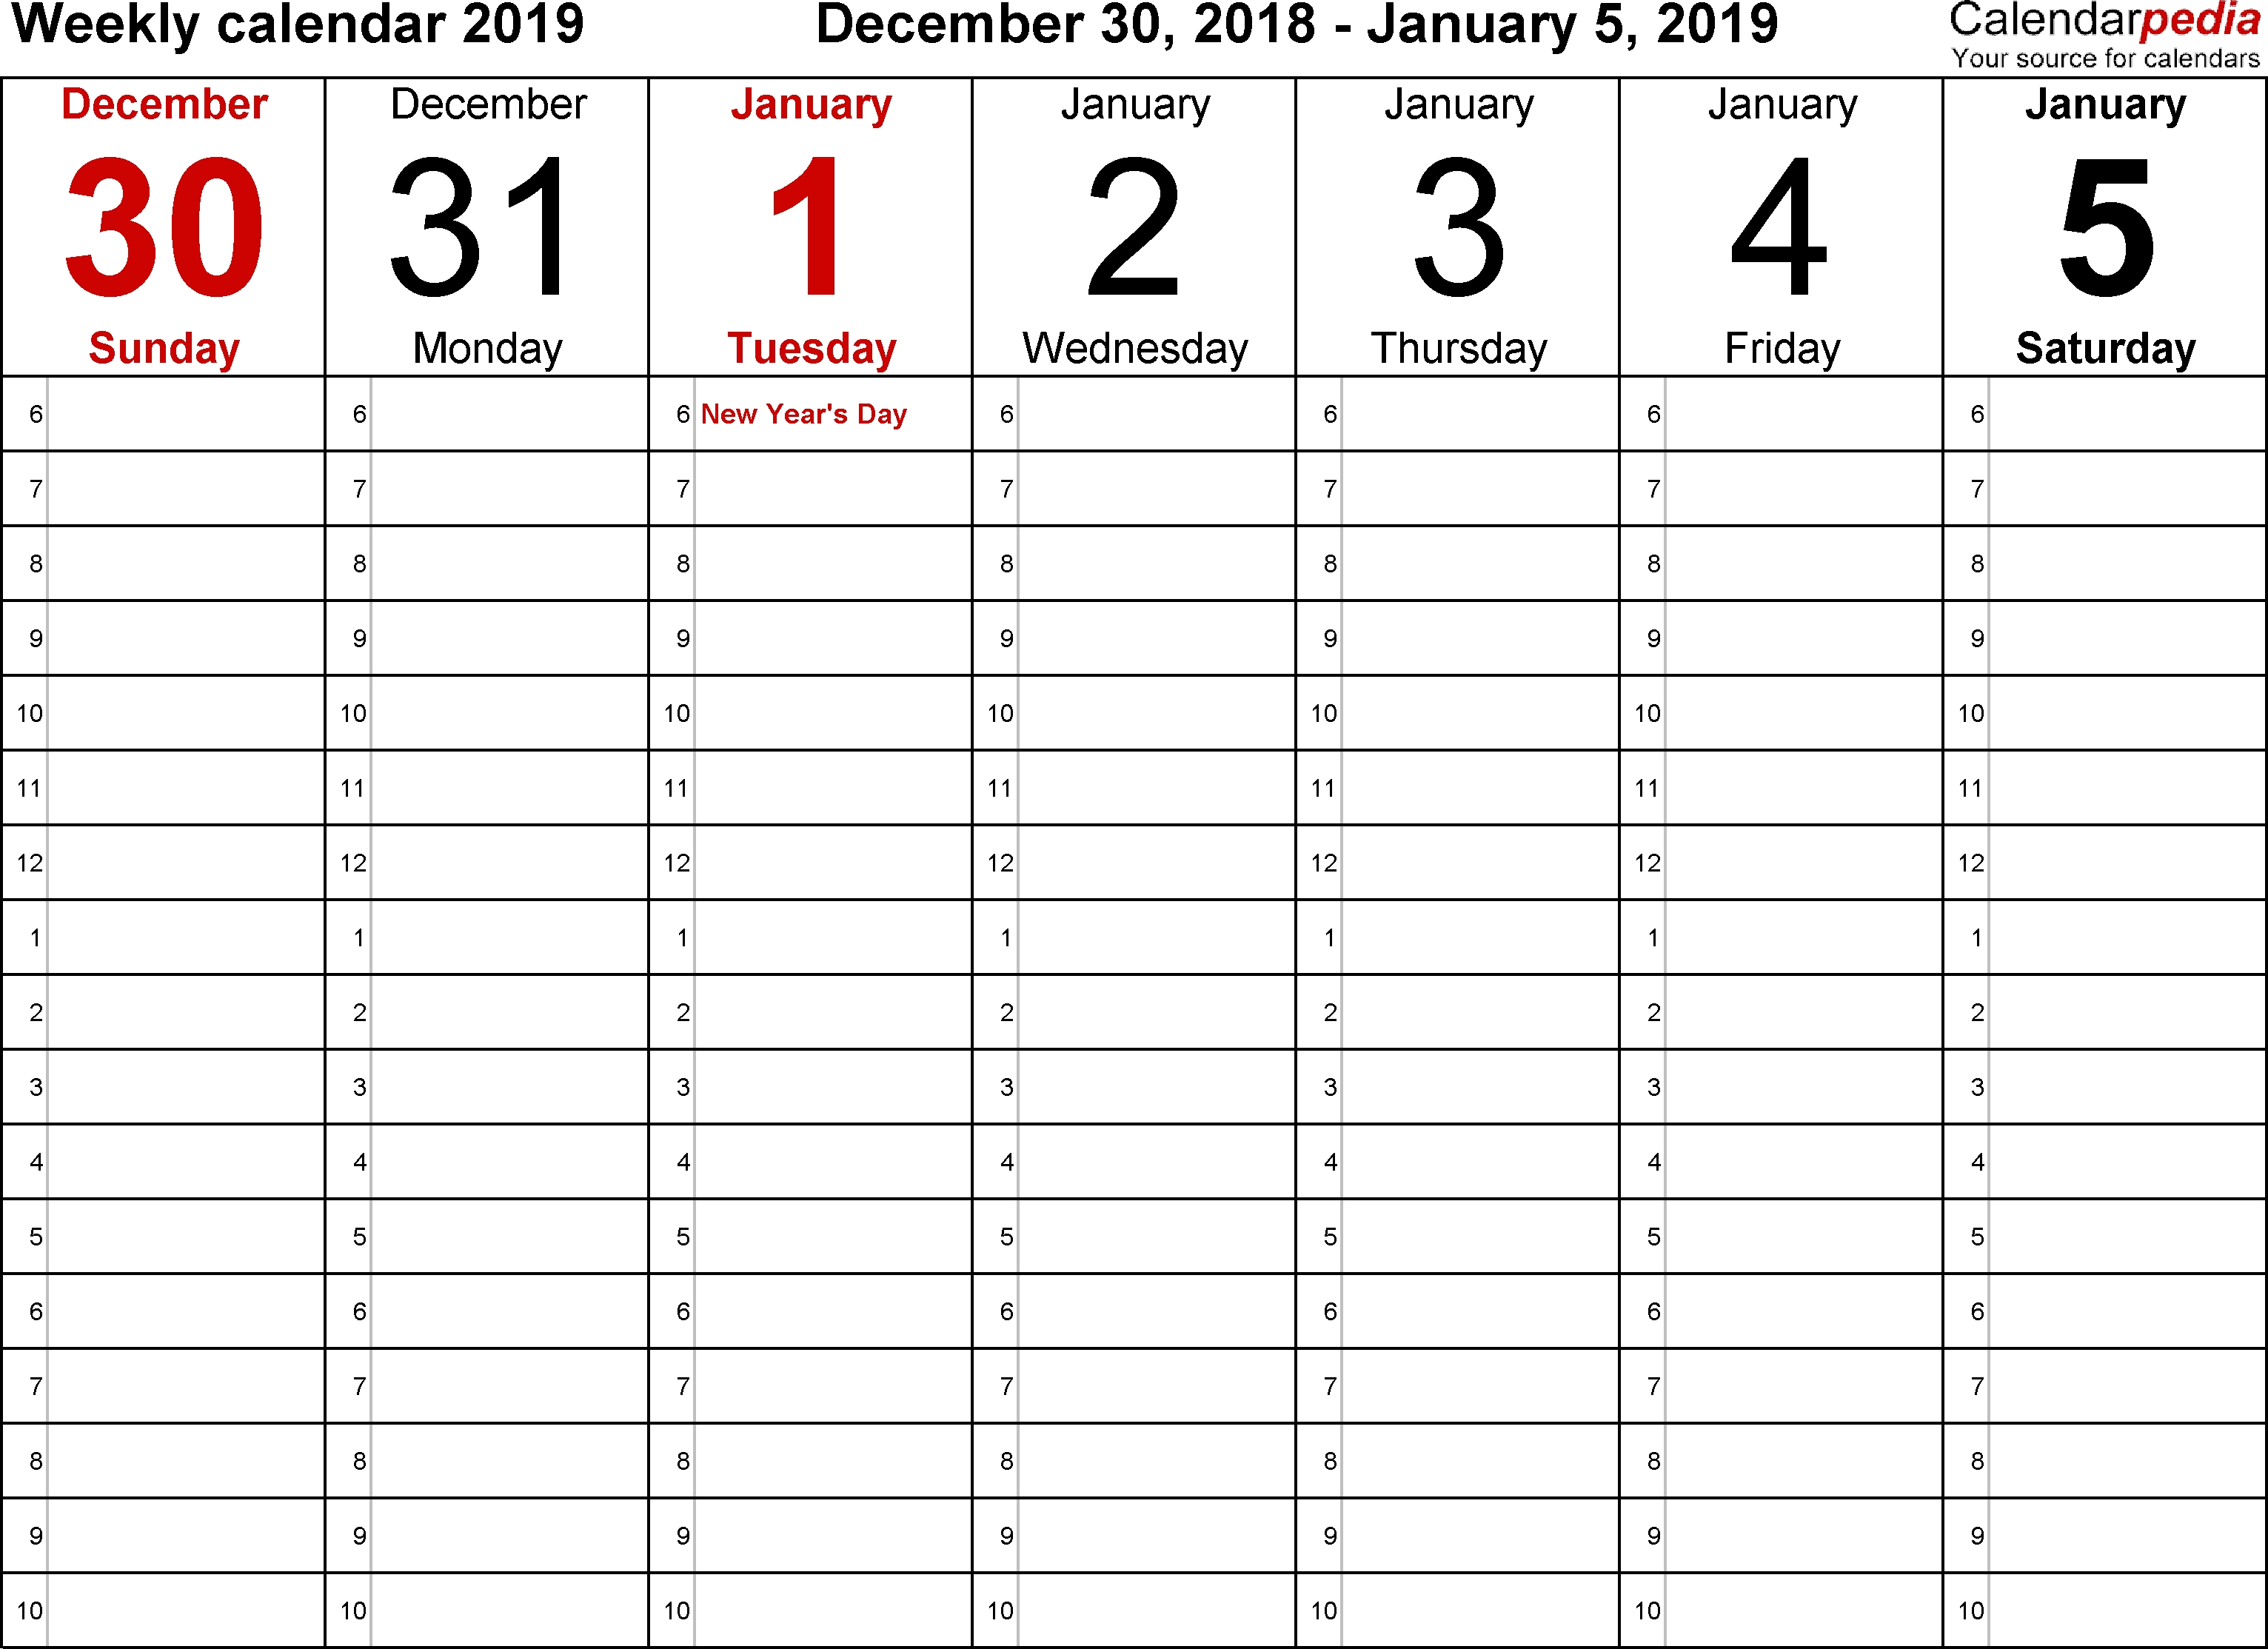 Calendarpedia - Your Source For Calendars Apple Calendar Nz Holidays